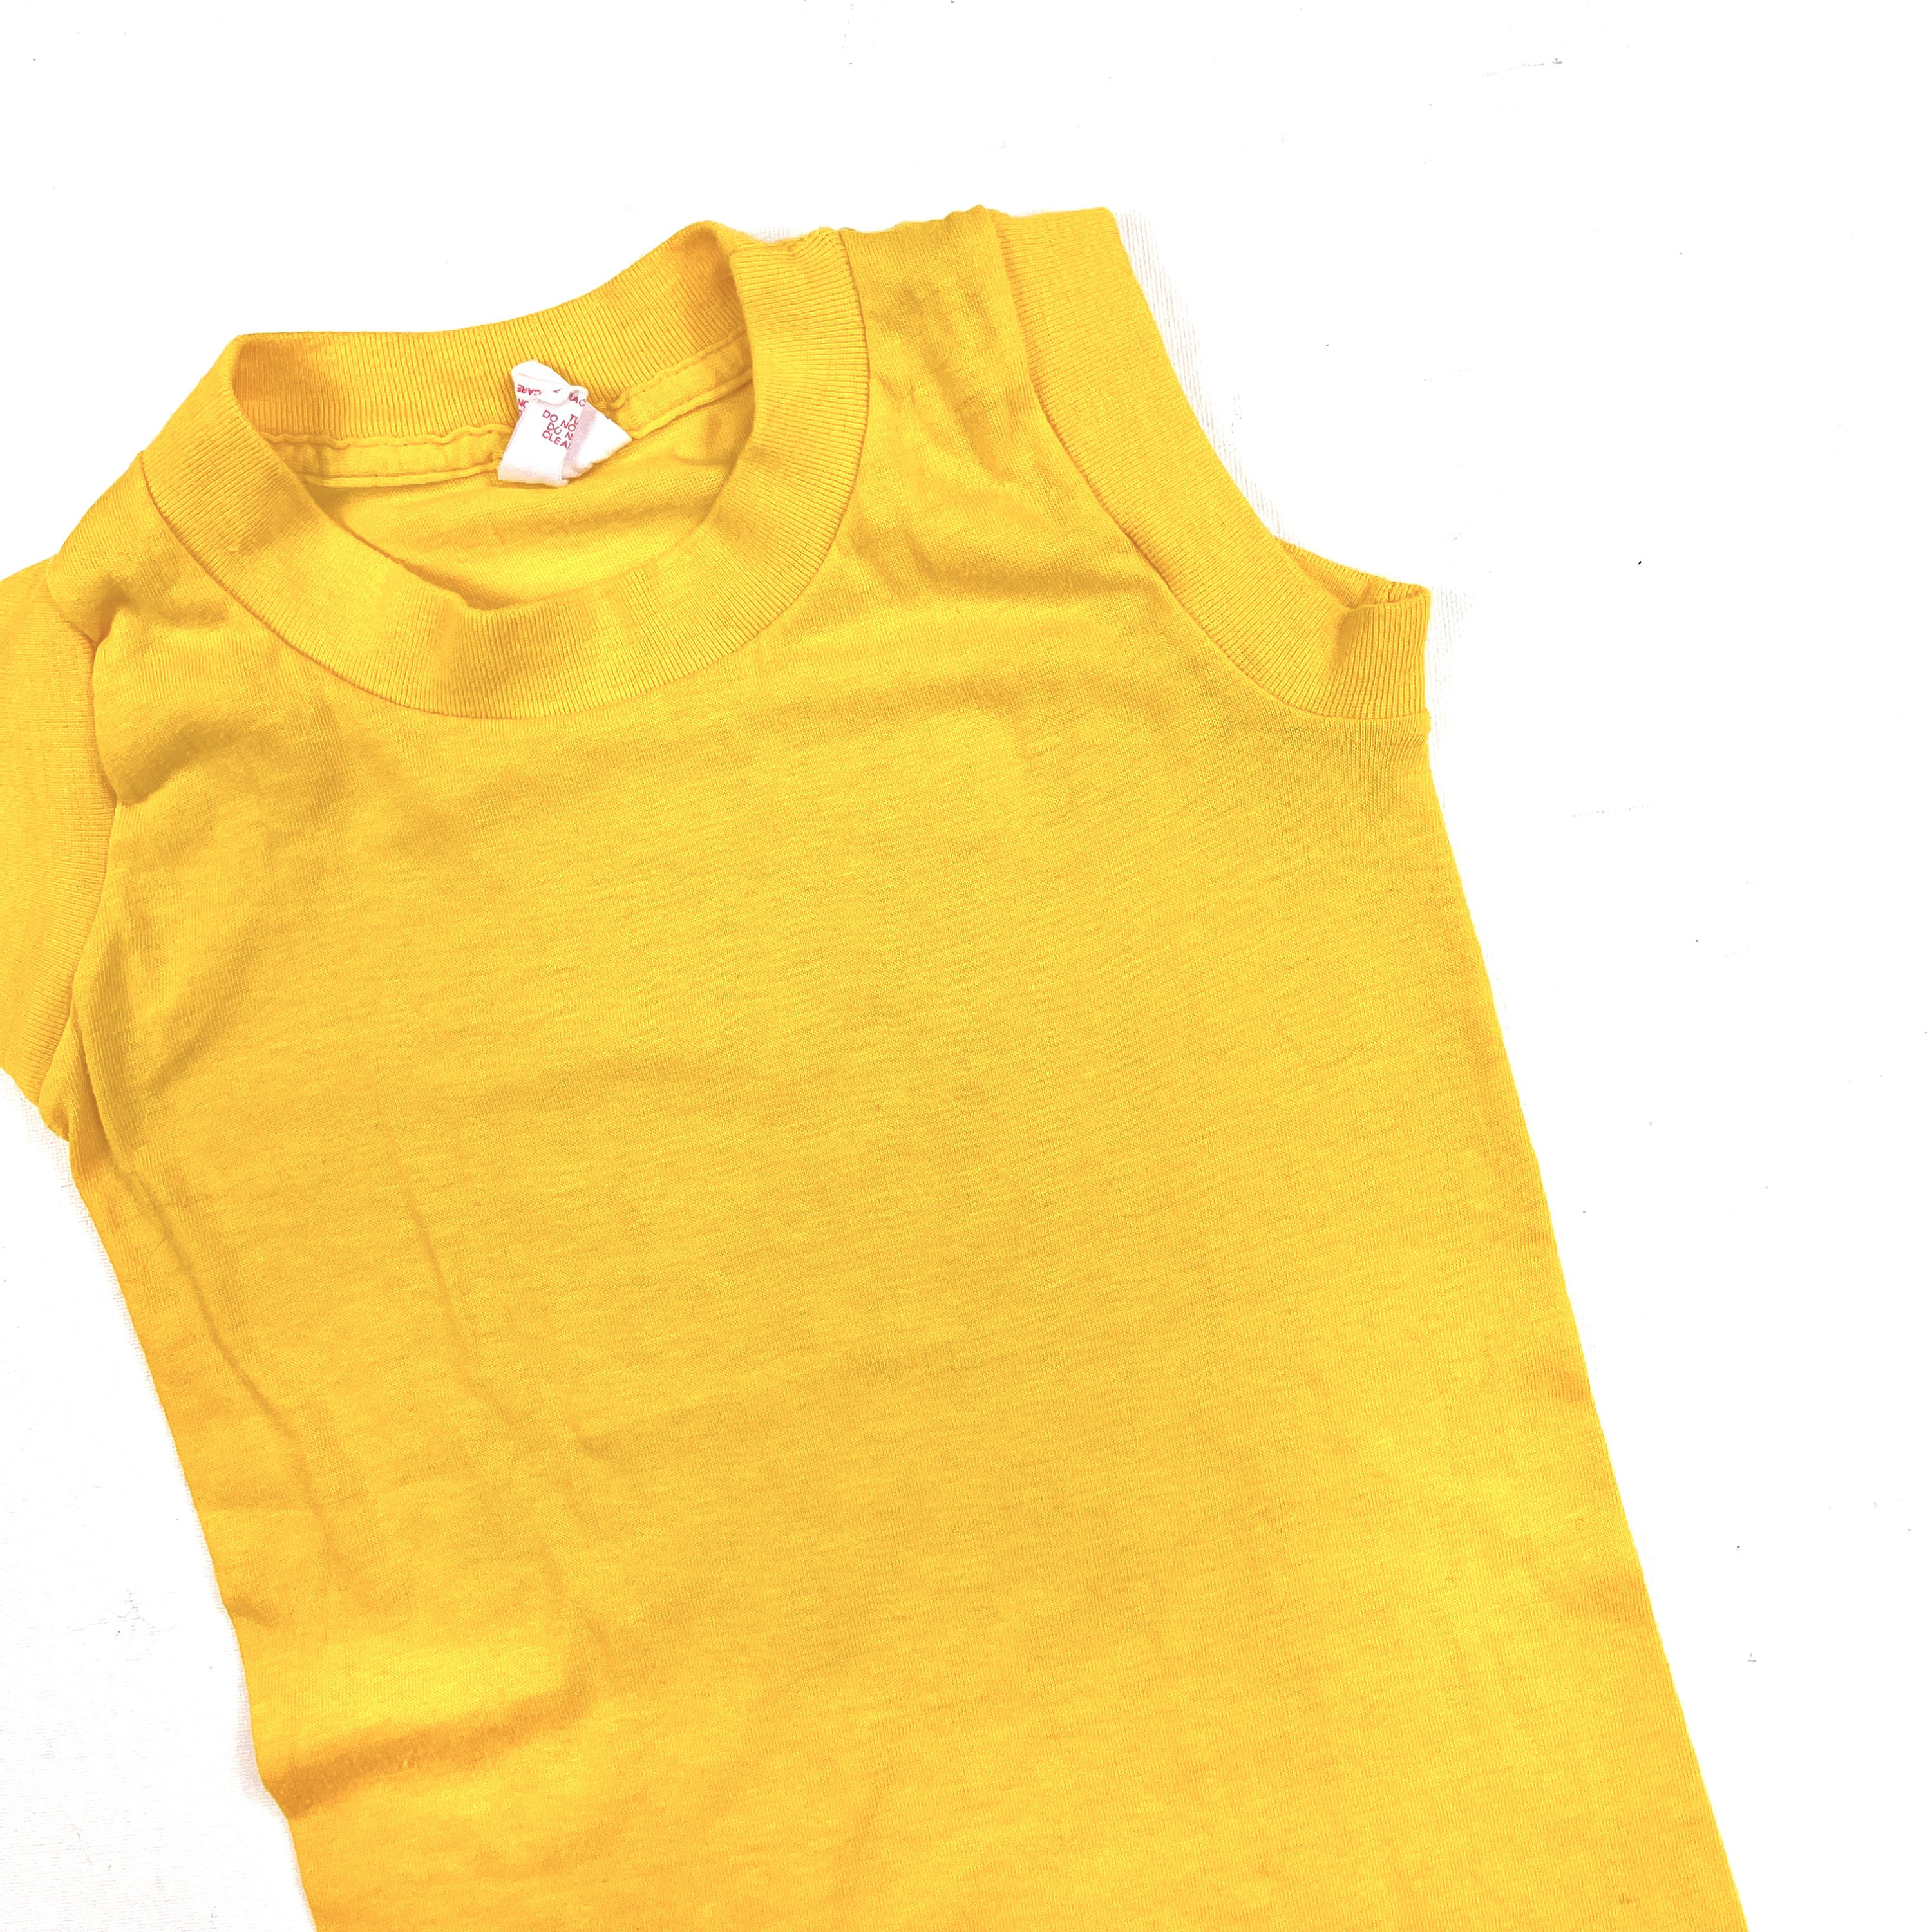 Vtg Surf style 2 piece set, 80s surf print shorts, Bright yellow